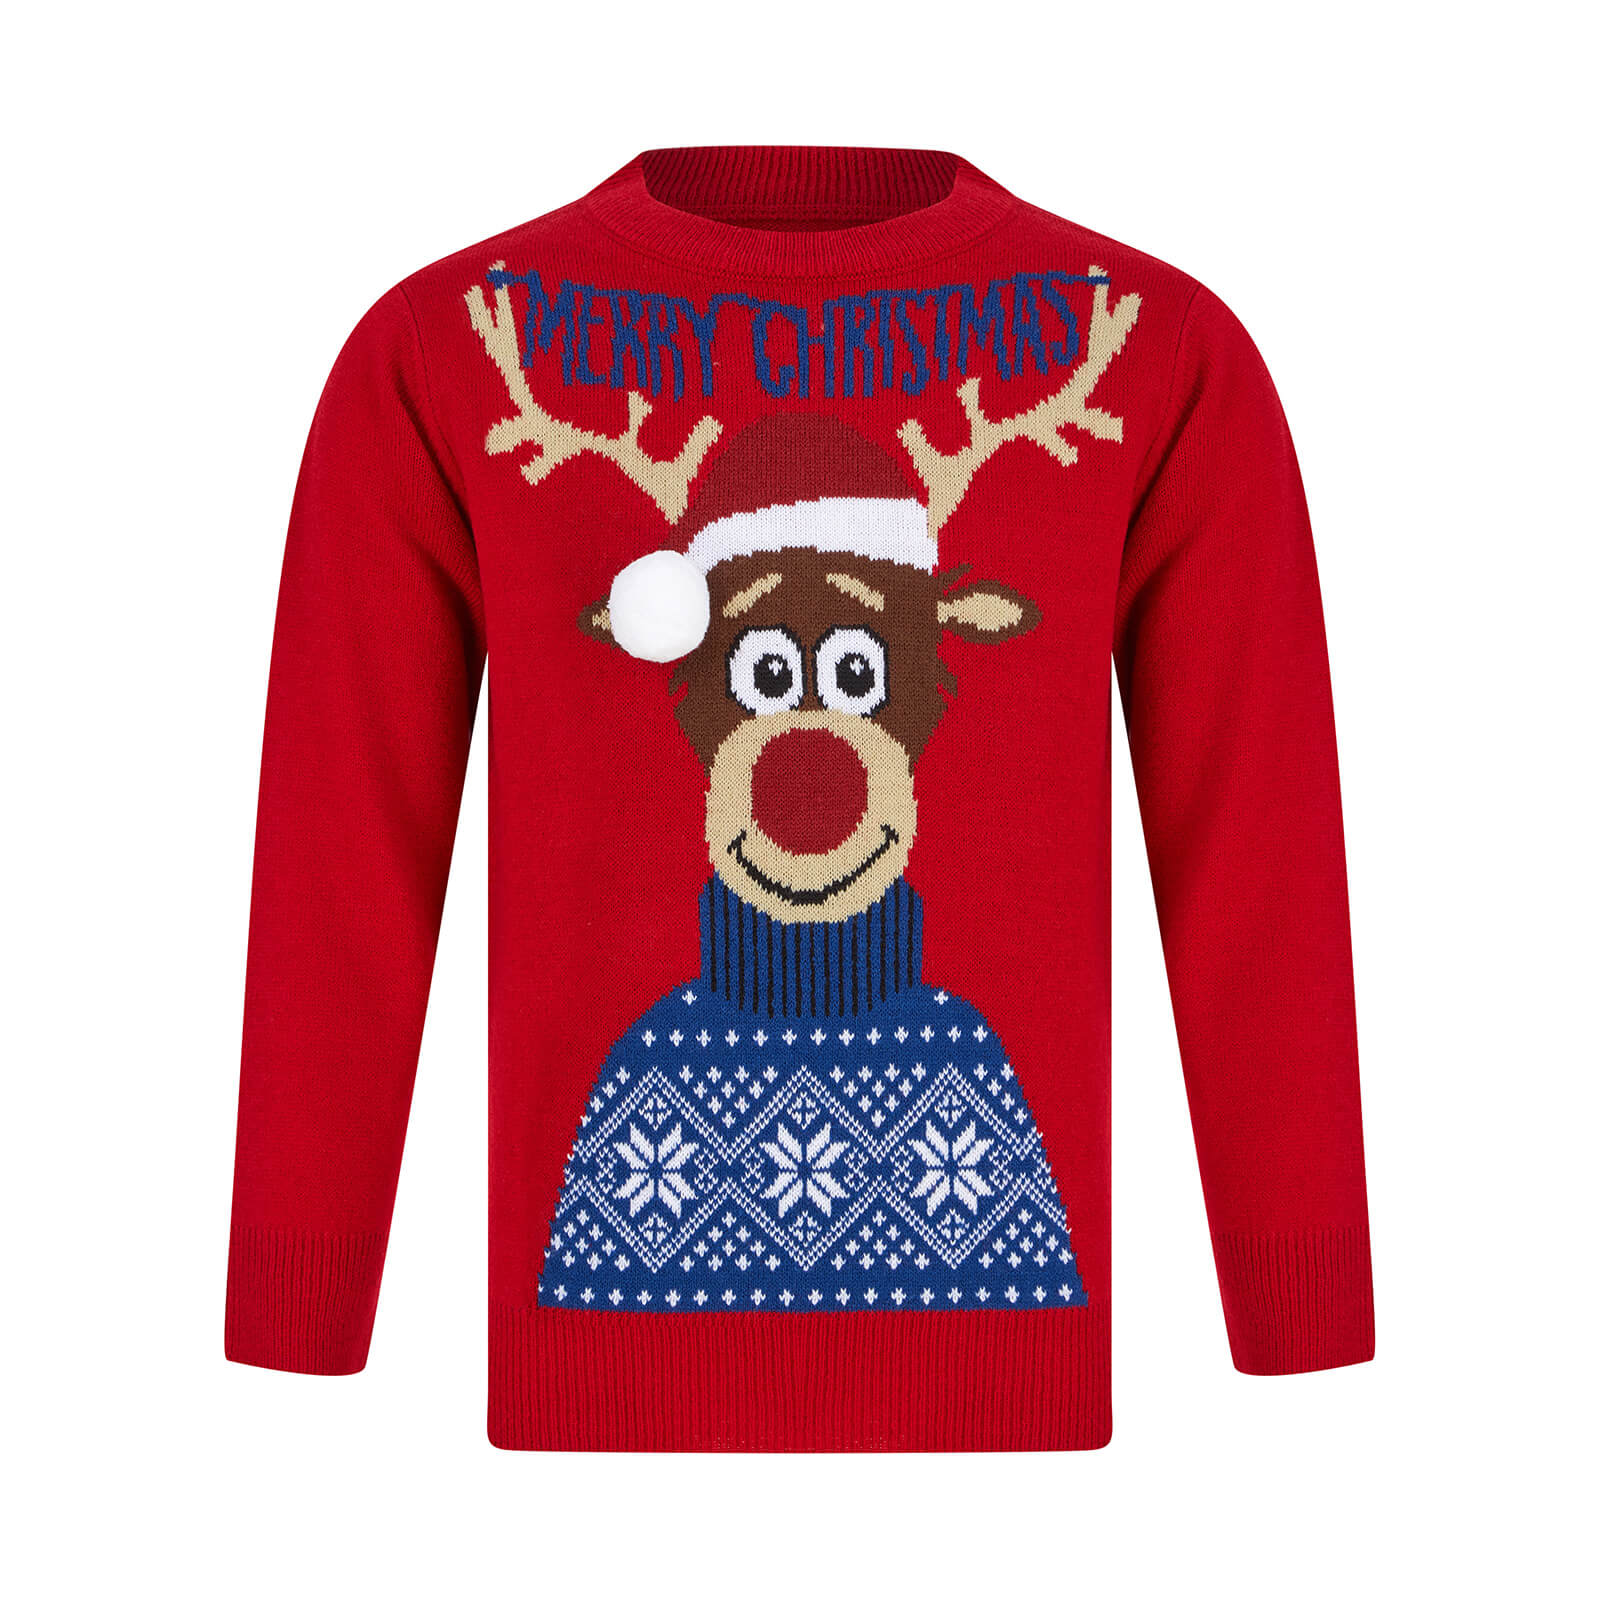 Mr Crimbo Kids Merry Christmas Antlers Reindeer Xmas Jumper - MrCrimbo.co.uk -SRG2A189901_A - Red -11-13 years